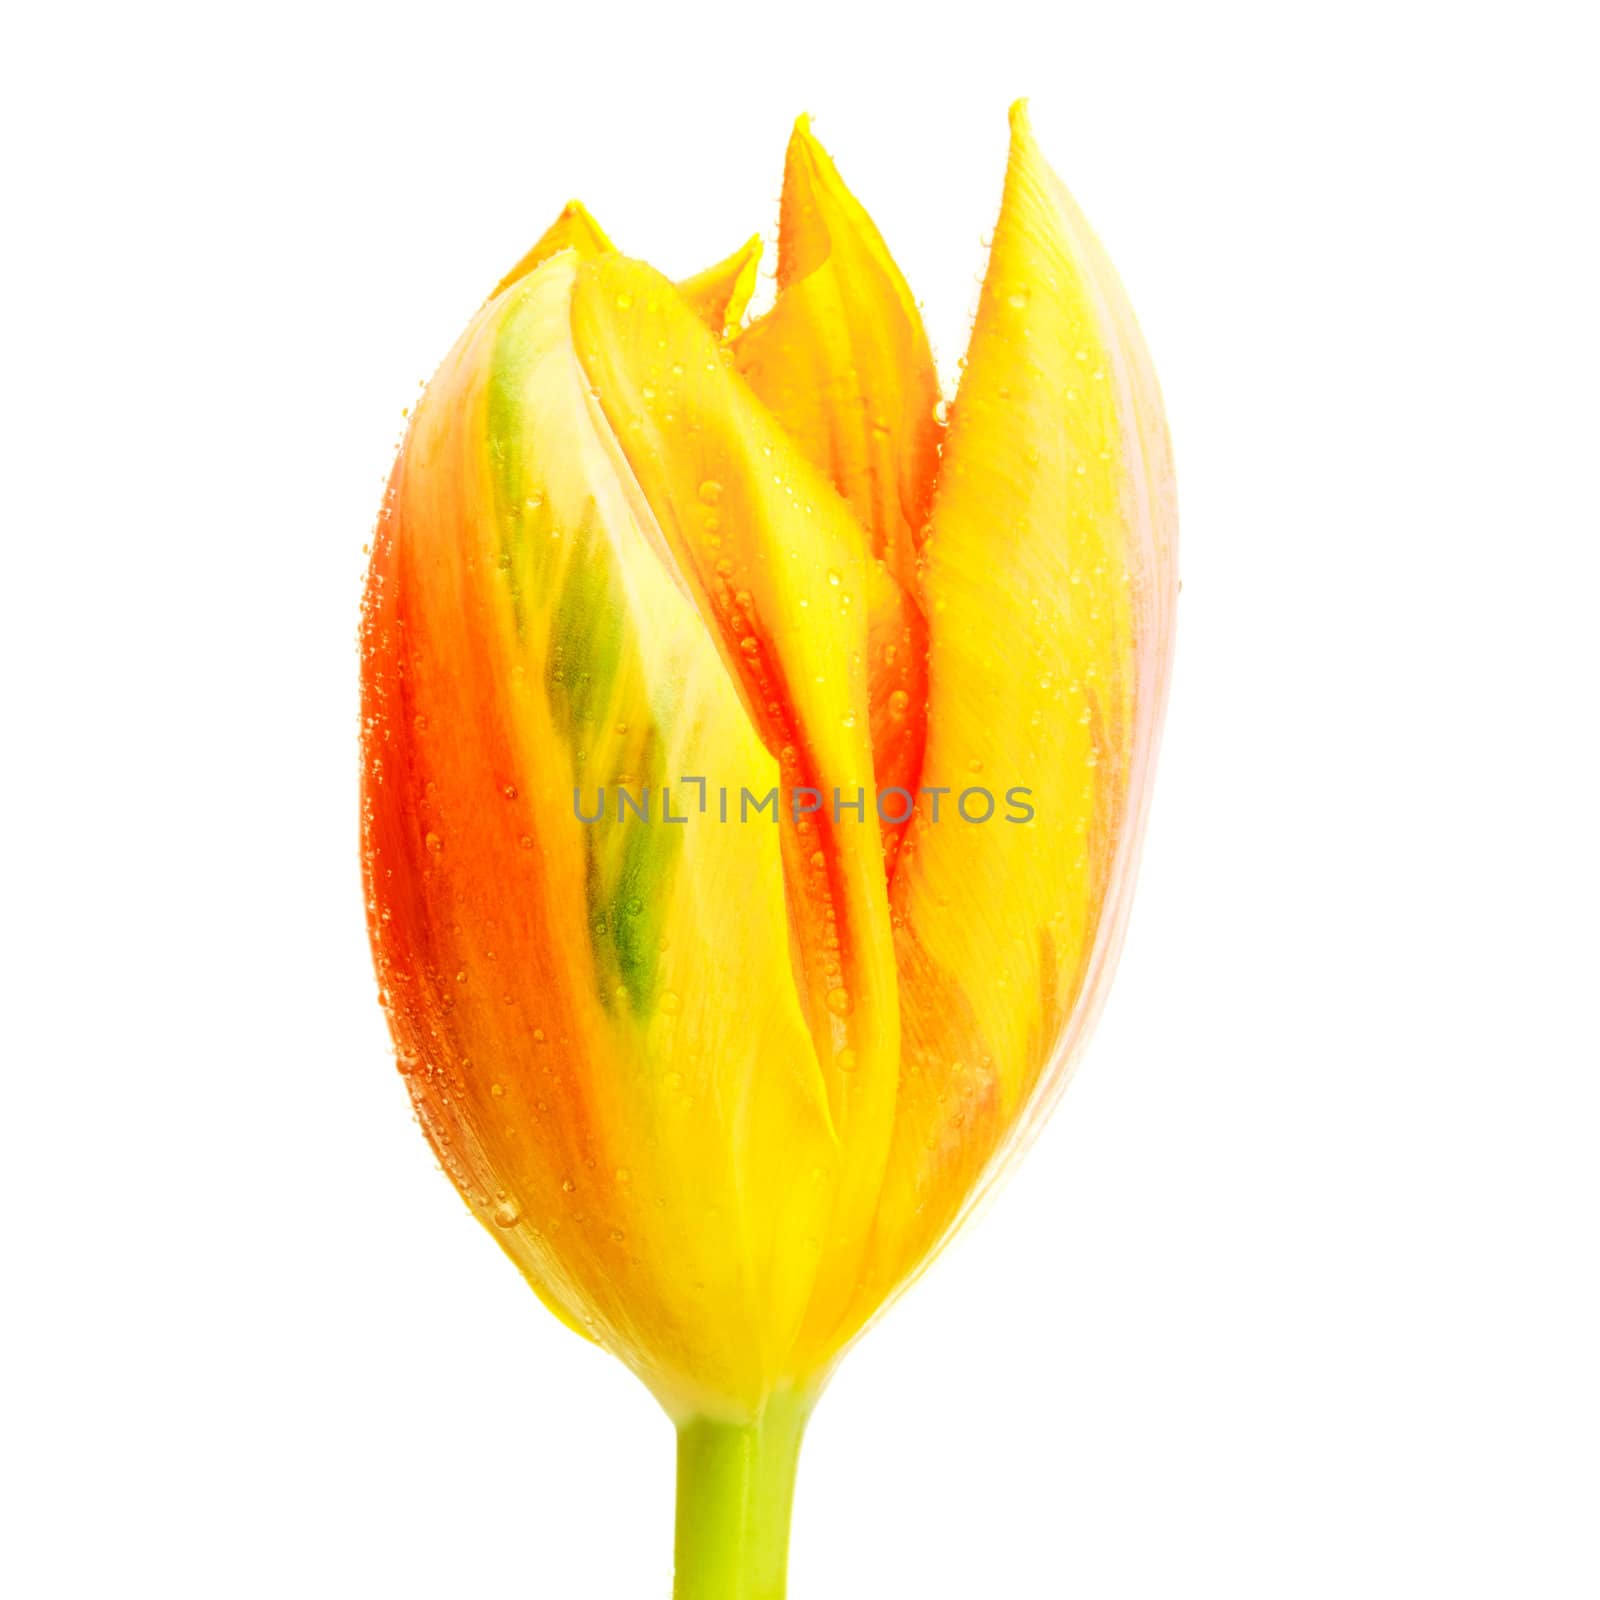 Yellow Tulip by petr_malyshev